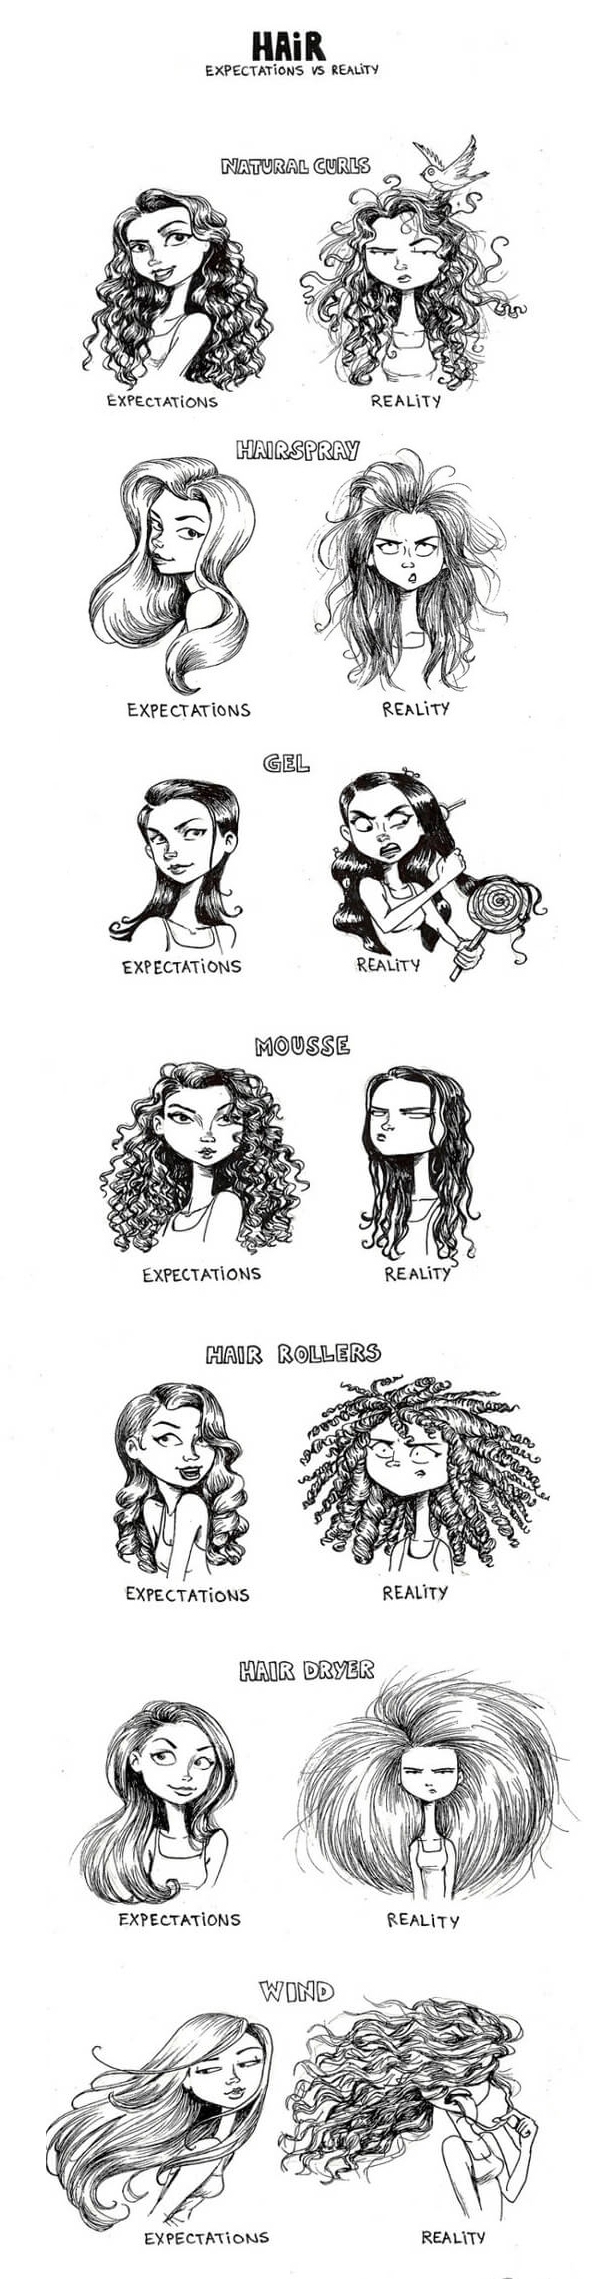 Womens Hair Expectations Vs Reality